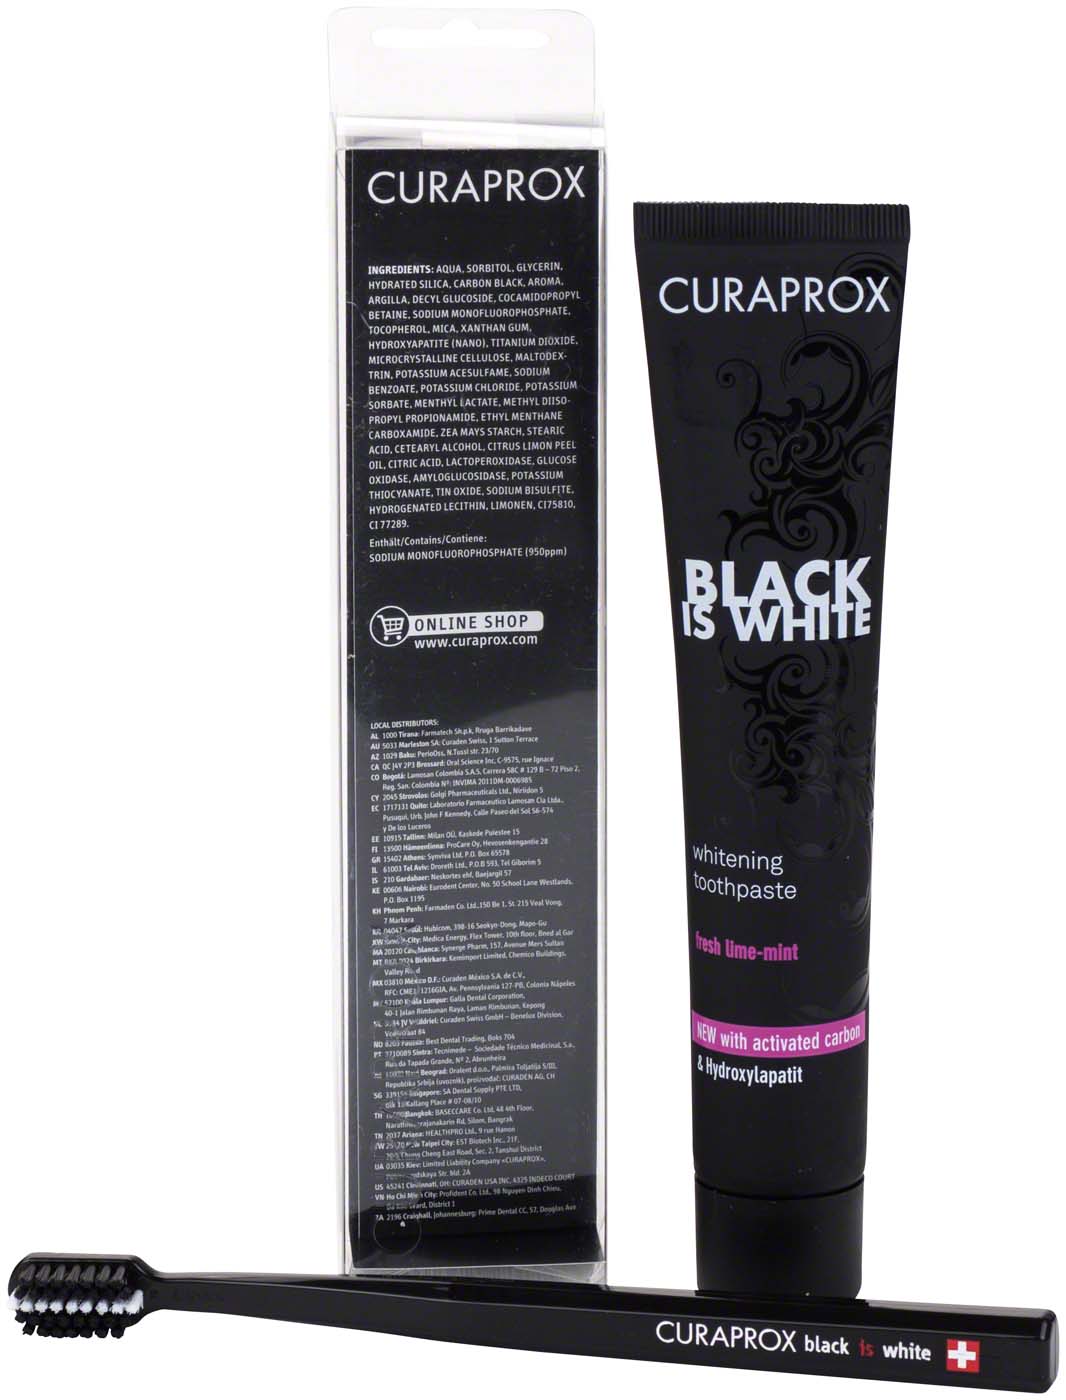 CURAPROX BLACK IS WHITE Curaden